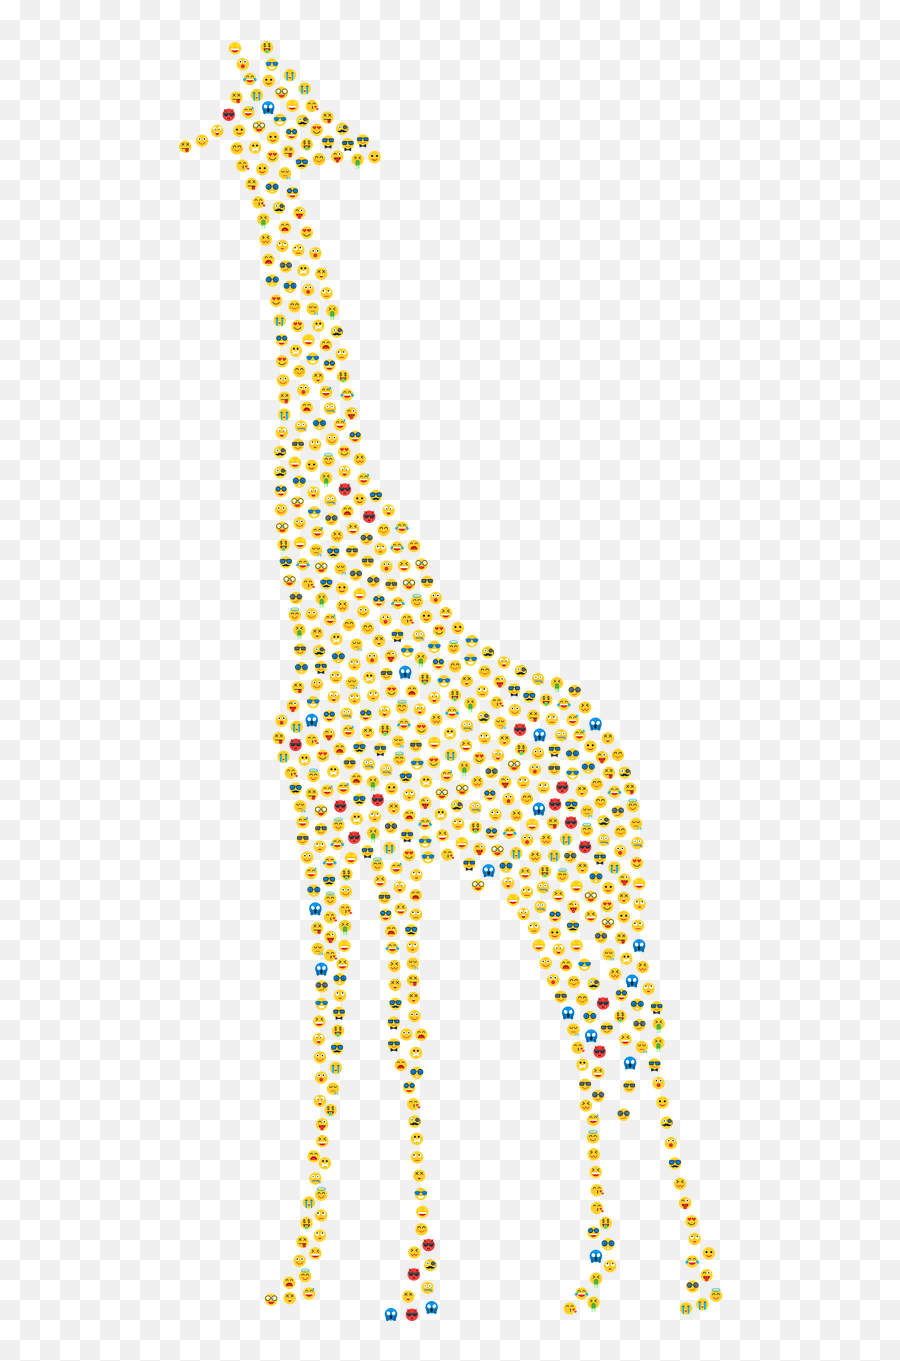 Giraffe Emoji Emoticons - Dot,Picture Of Giraffe Emoji